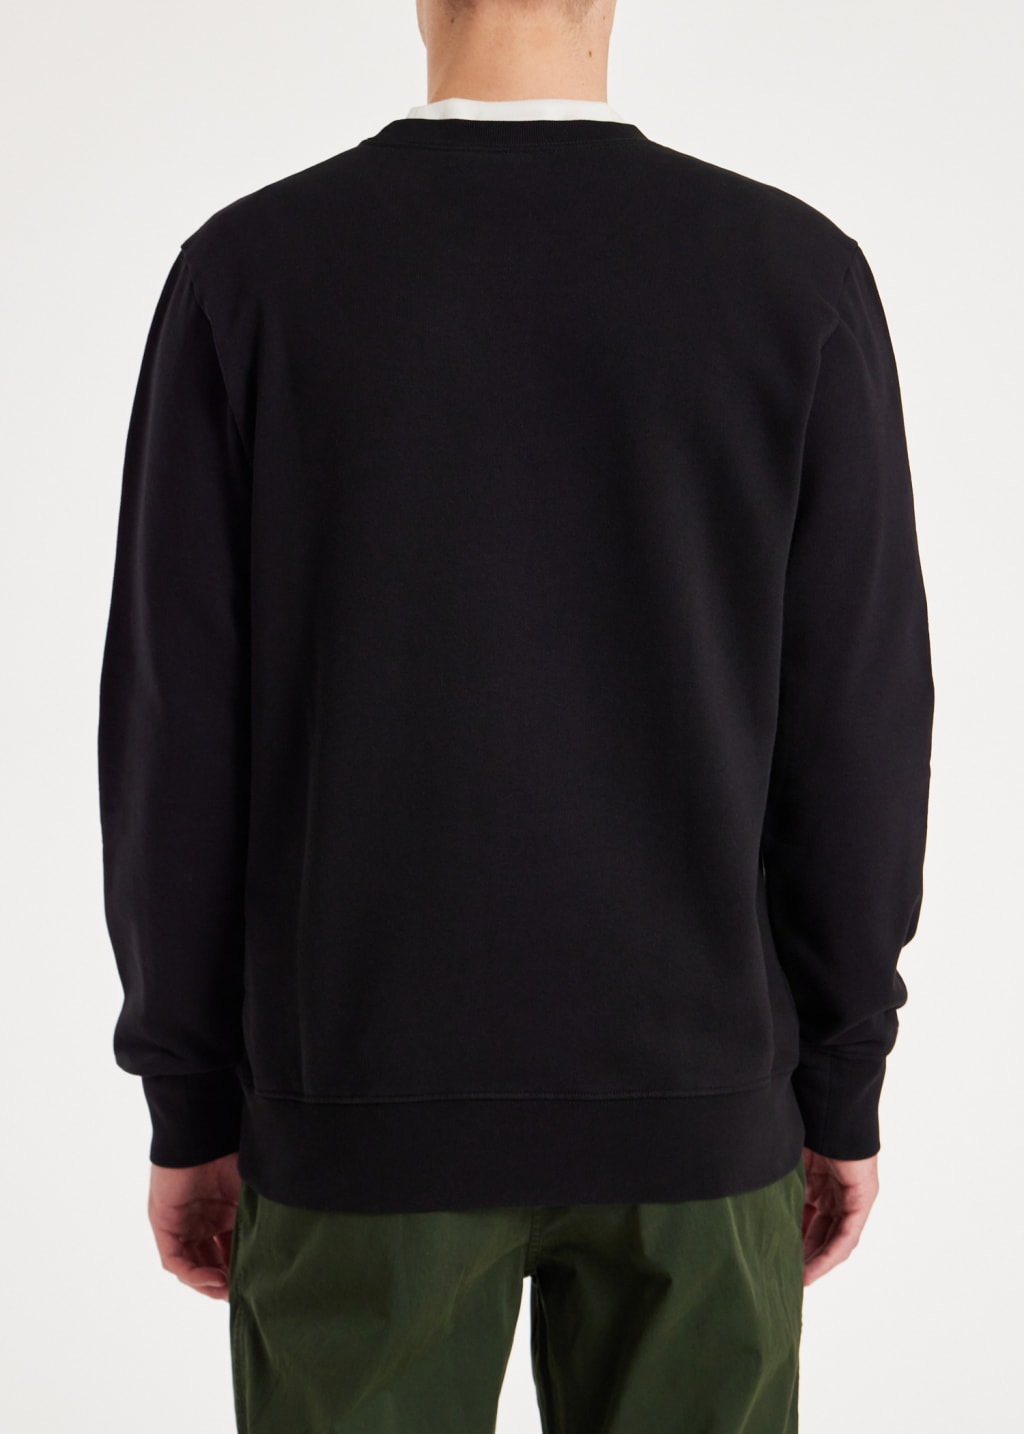 Model View - Black 'Circles' Print Cotton Sweatshirt Paul Smith